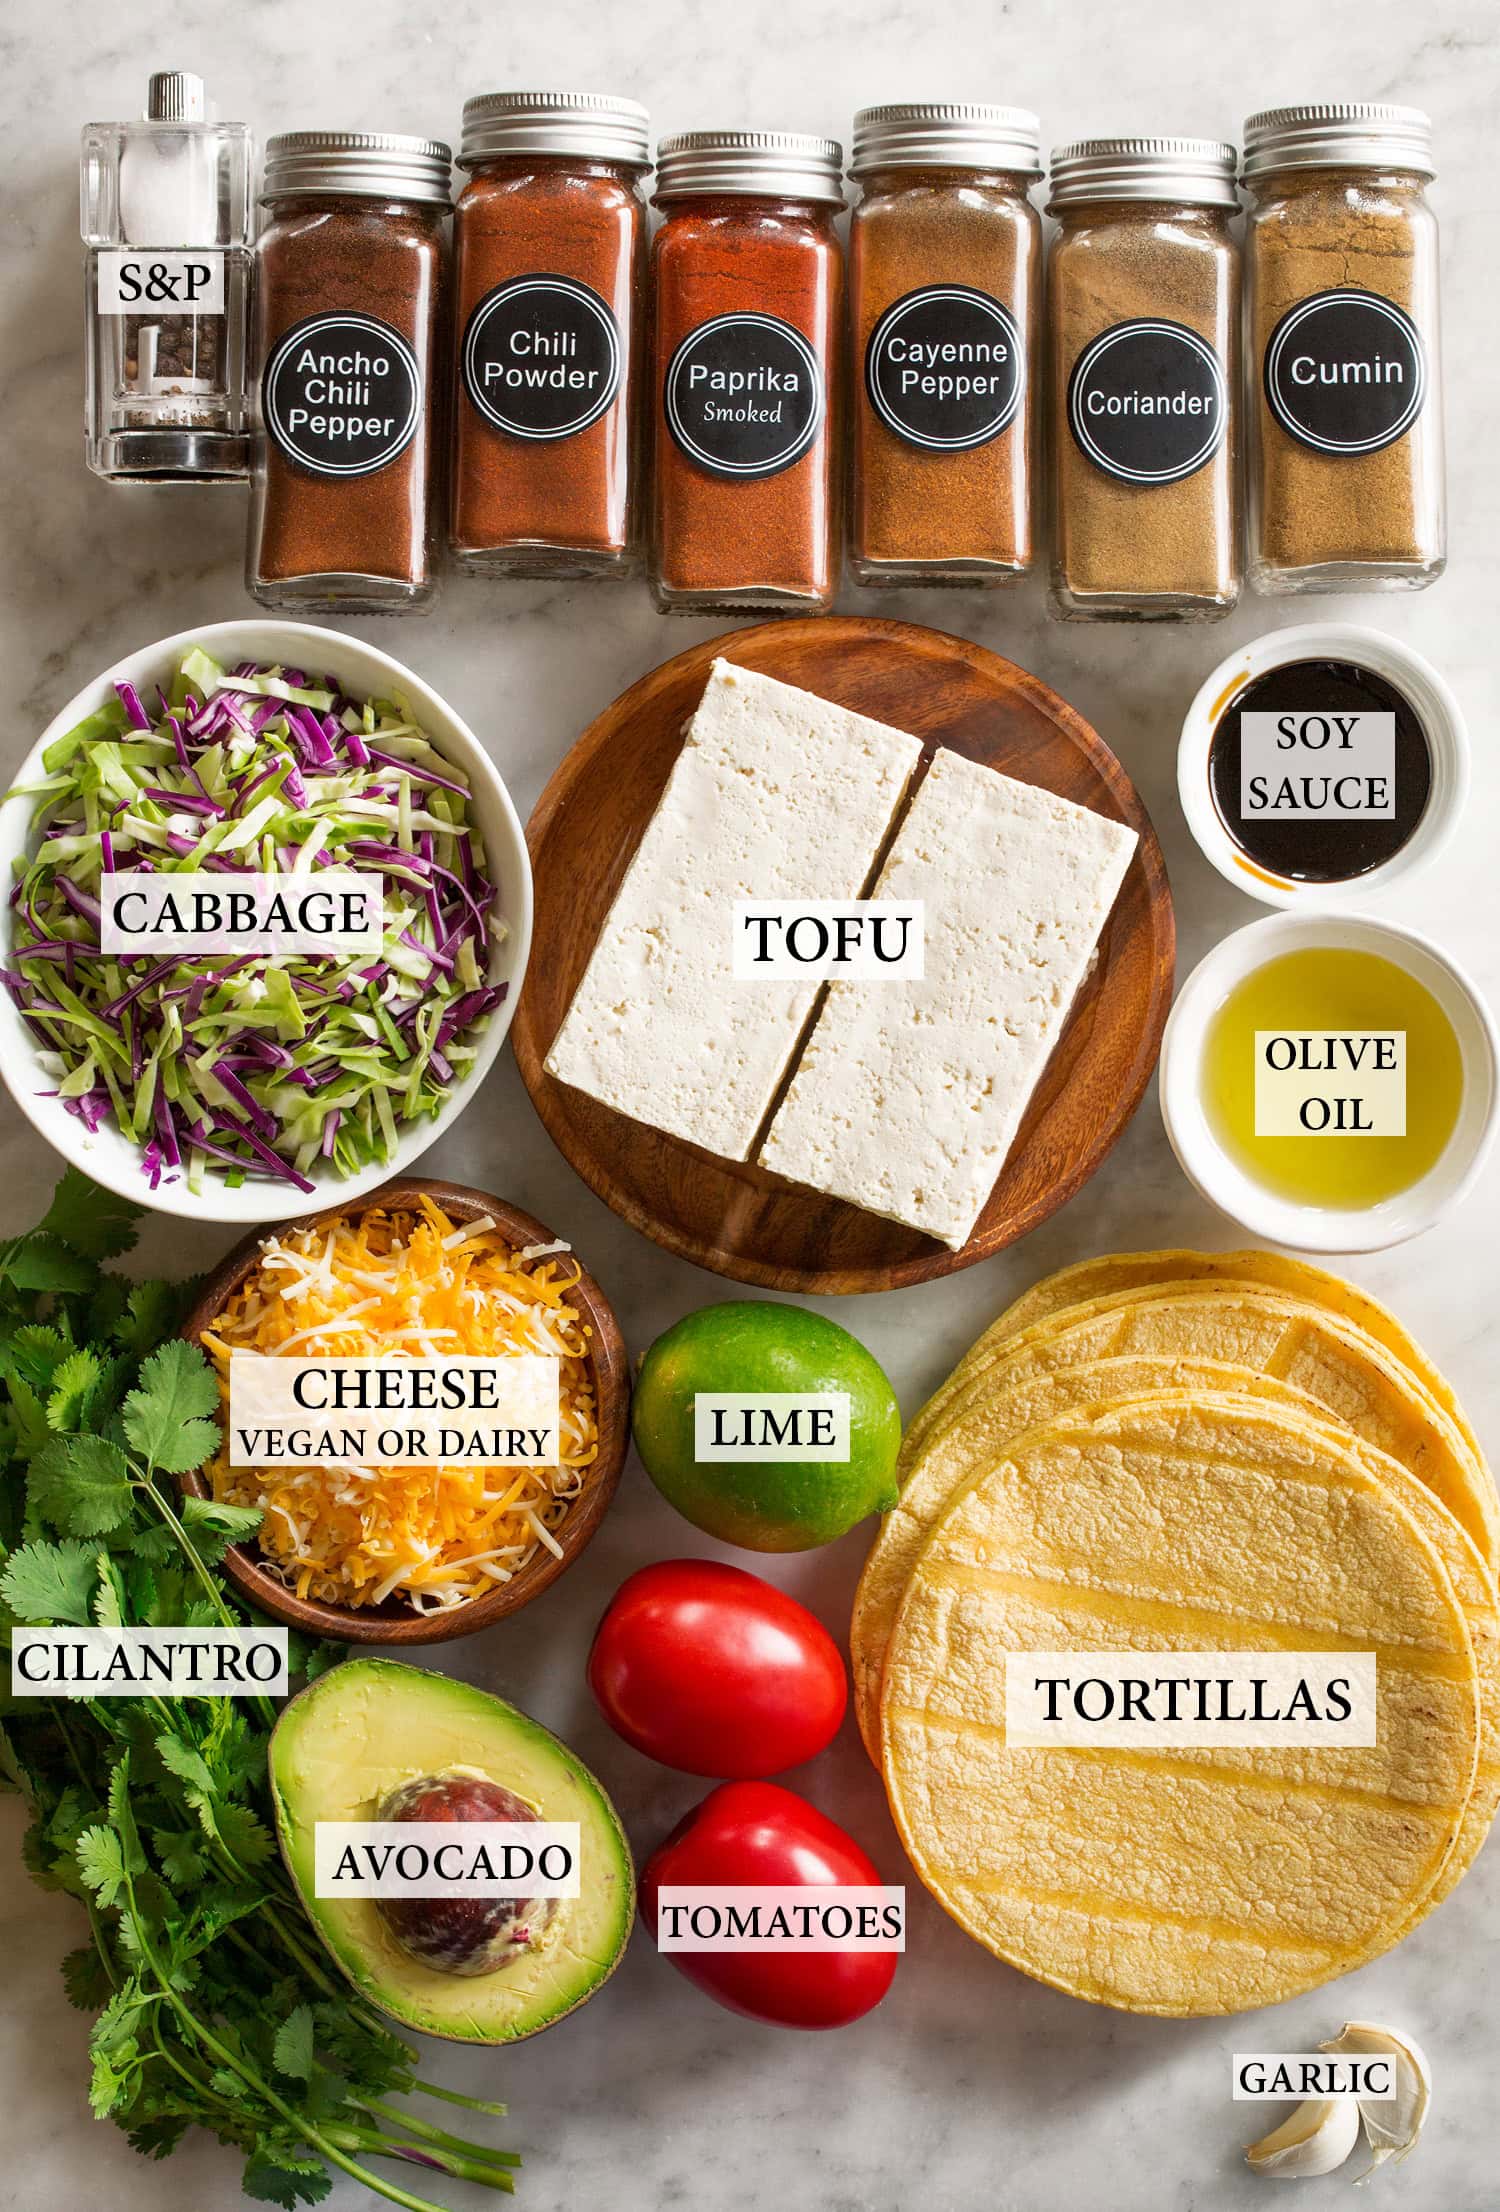 Ingredients used to make tofu tacos shown.